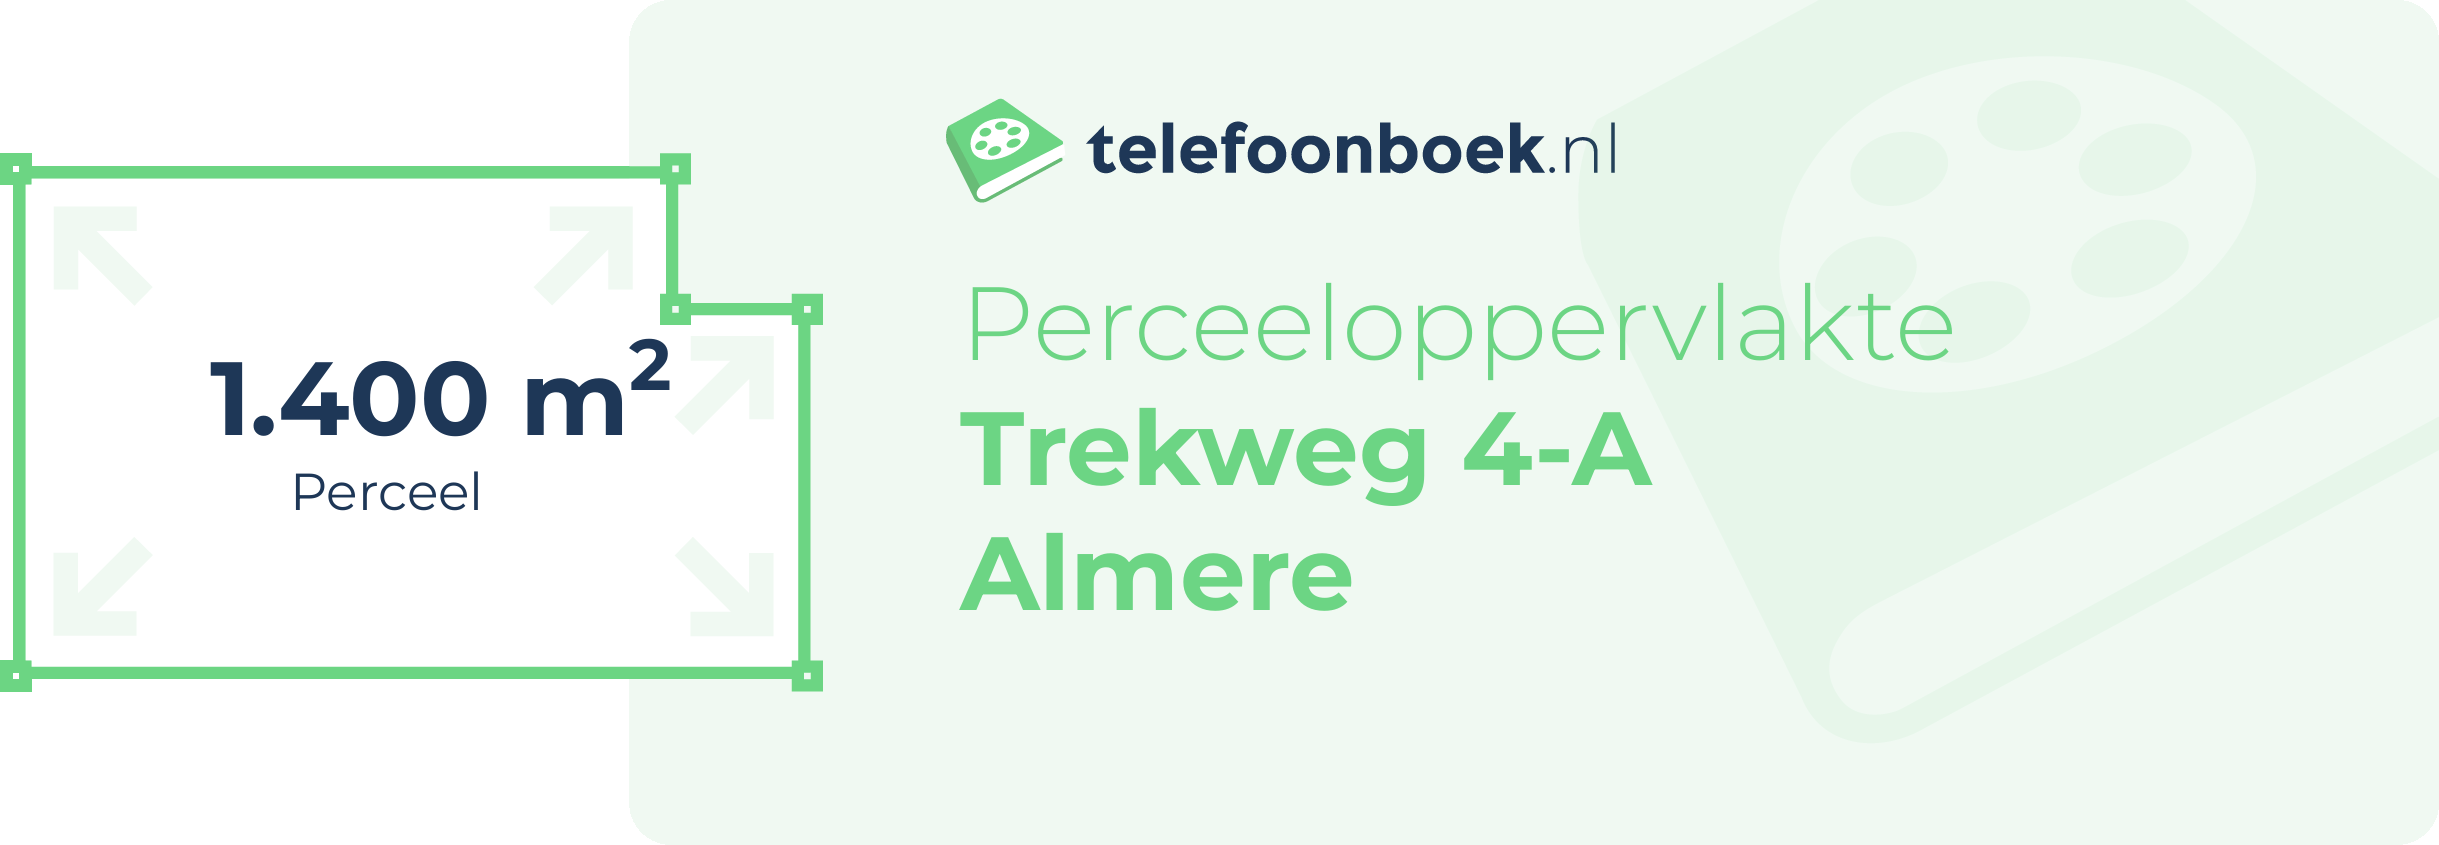 Perceeloppervlakte Trekweg 4-A Almere